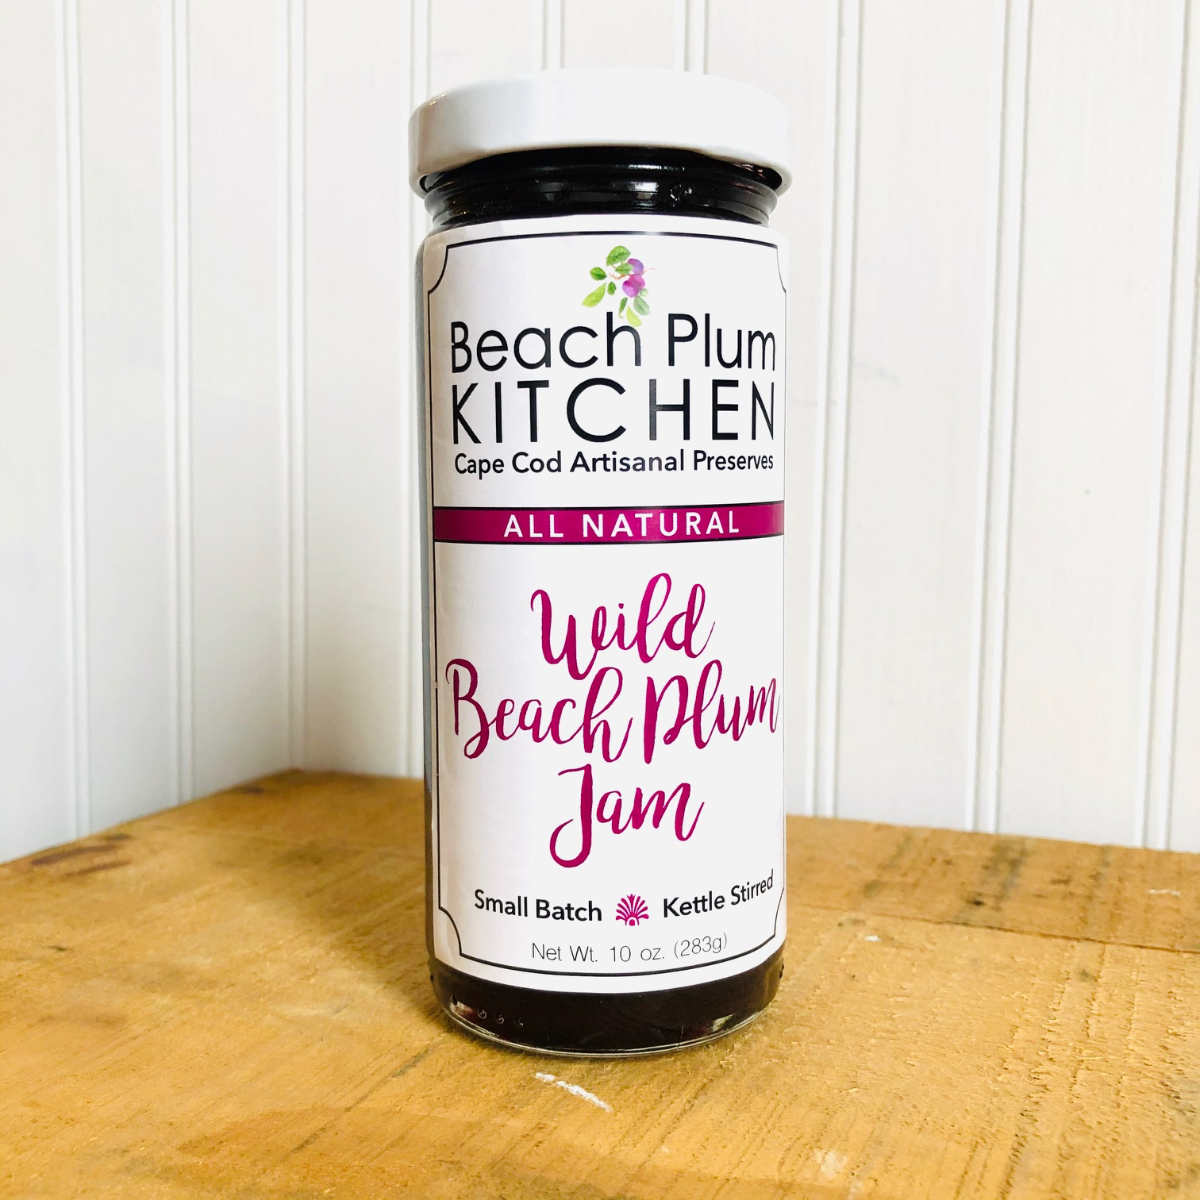 Cape Cod's Beach Plum Kitchen makes their signature amazing, artisanal Wild Beach Plum Jam with all natural, non-gmo ingredients.